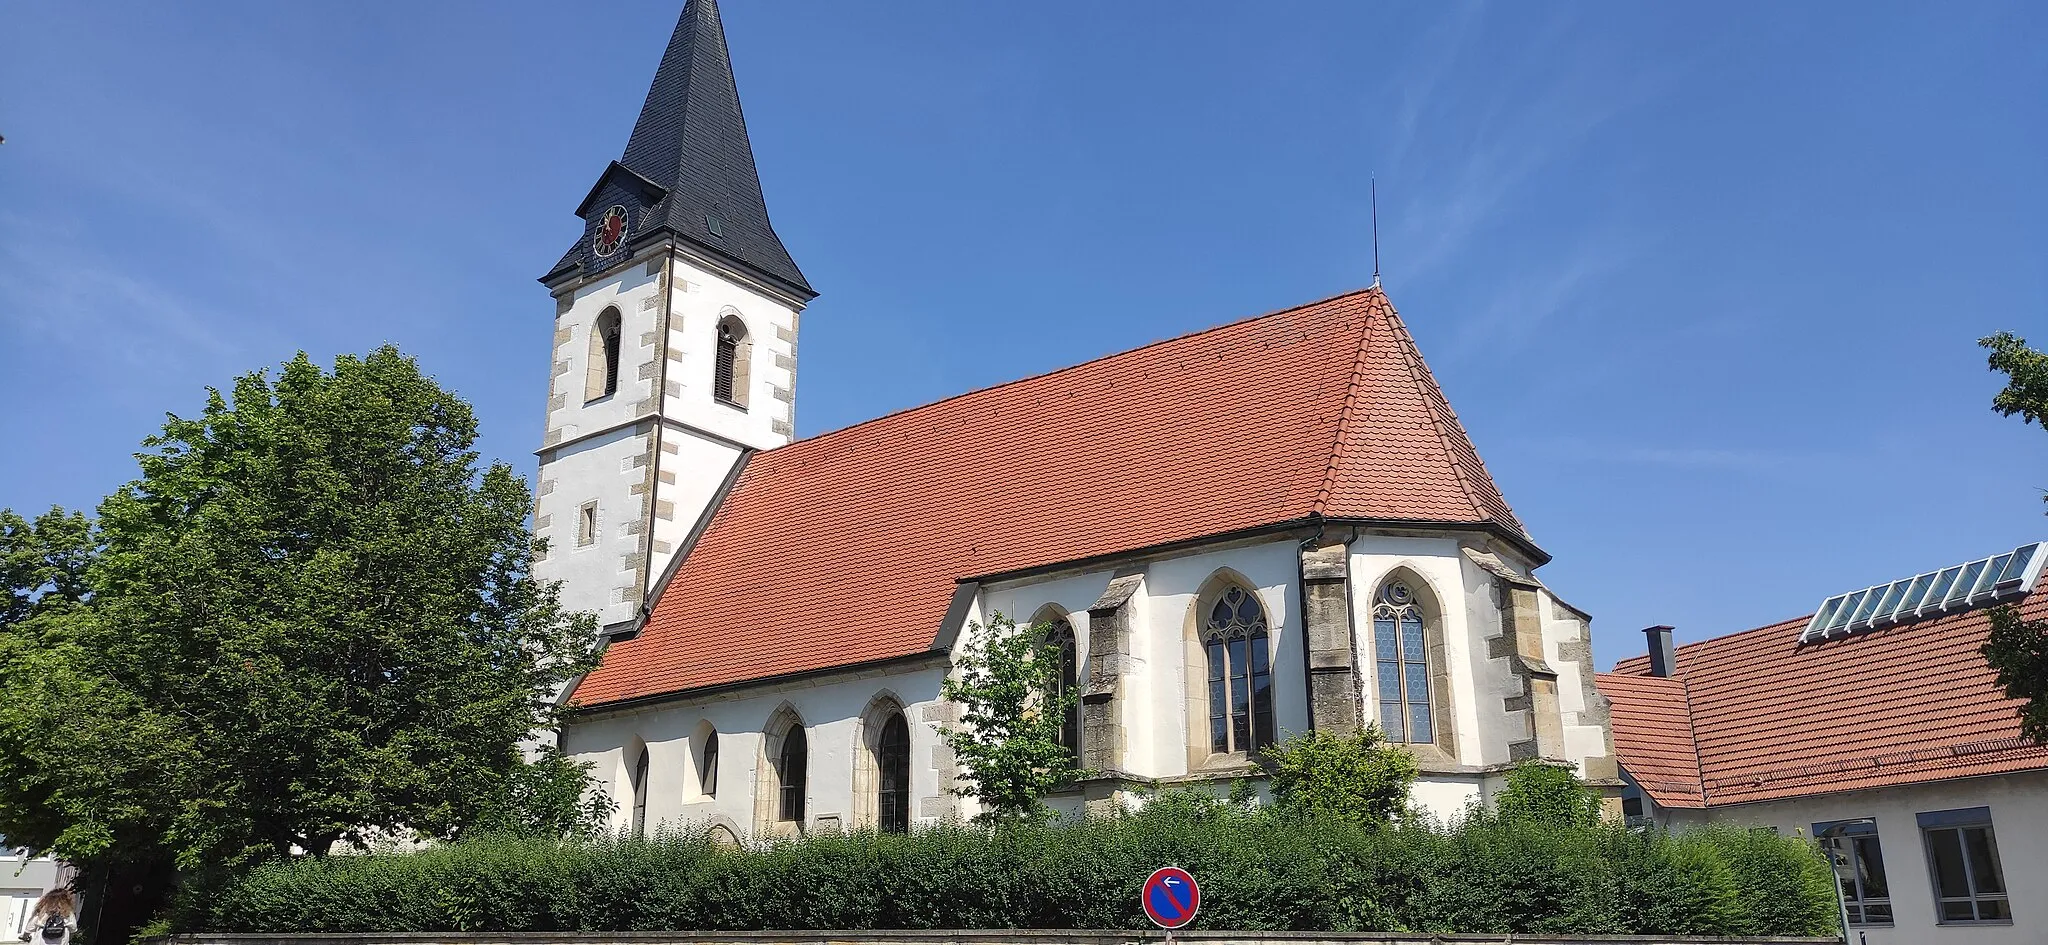 Photo showing: Aegidiuskirche in Baltmannsweiler, 2021